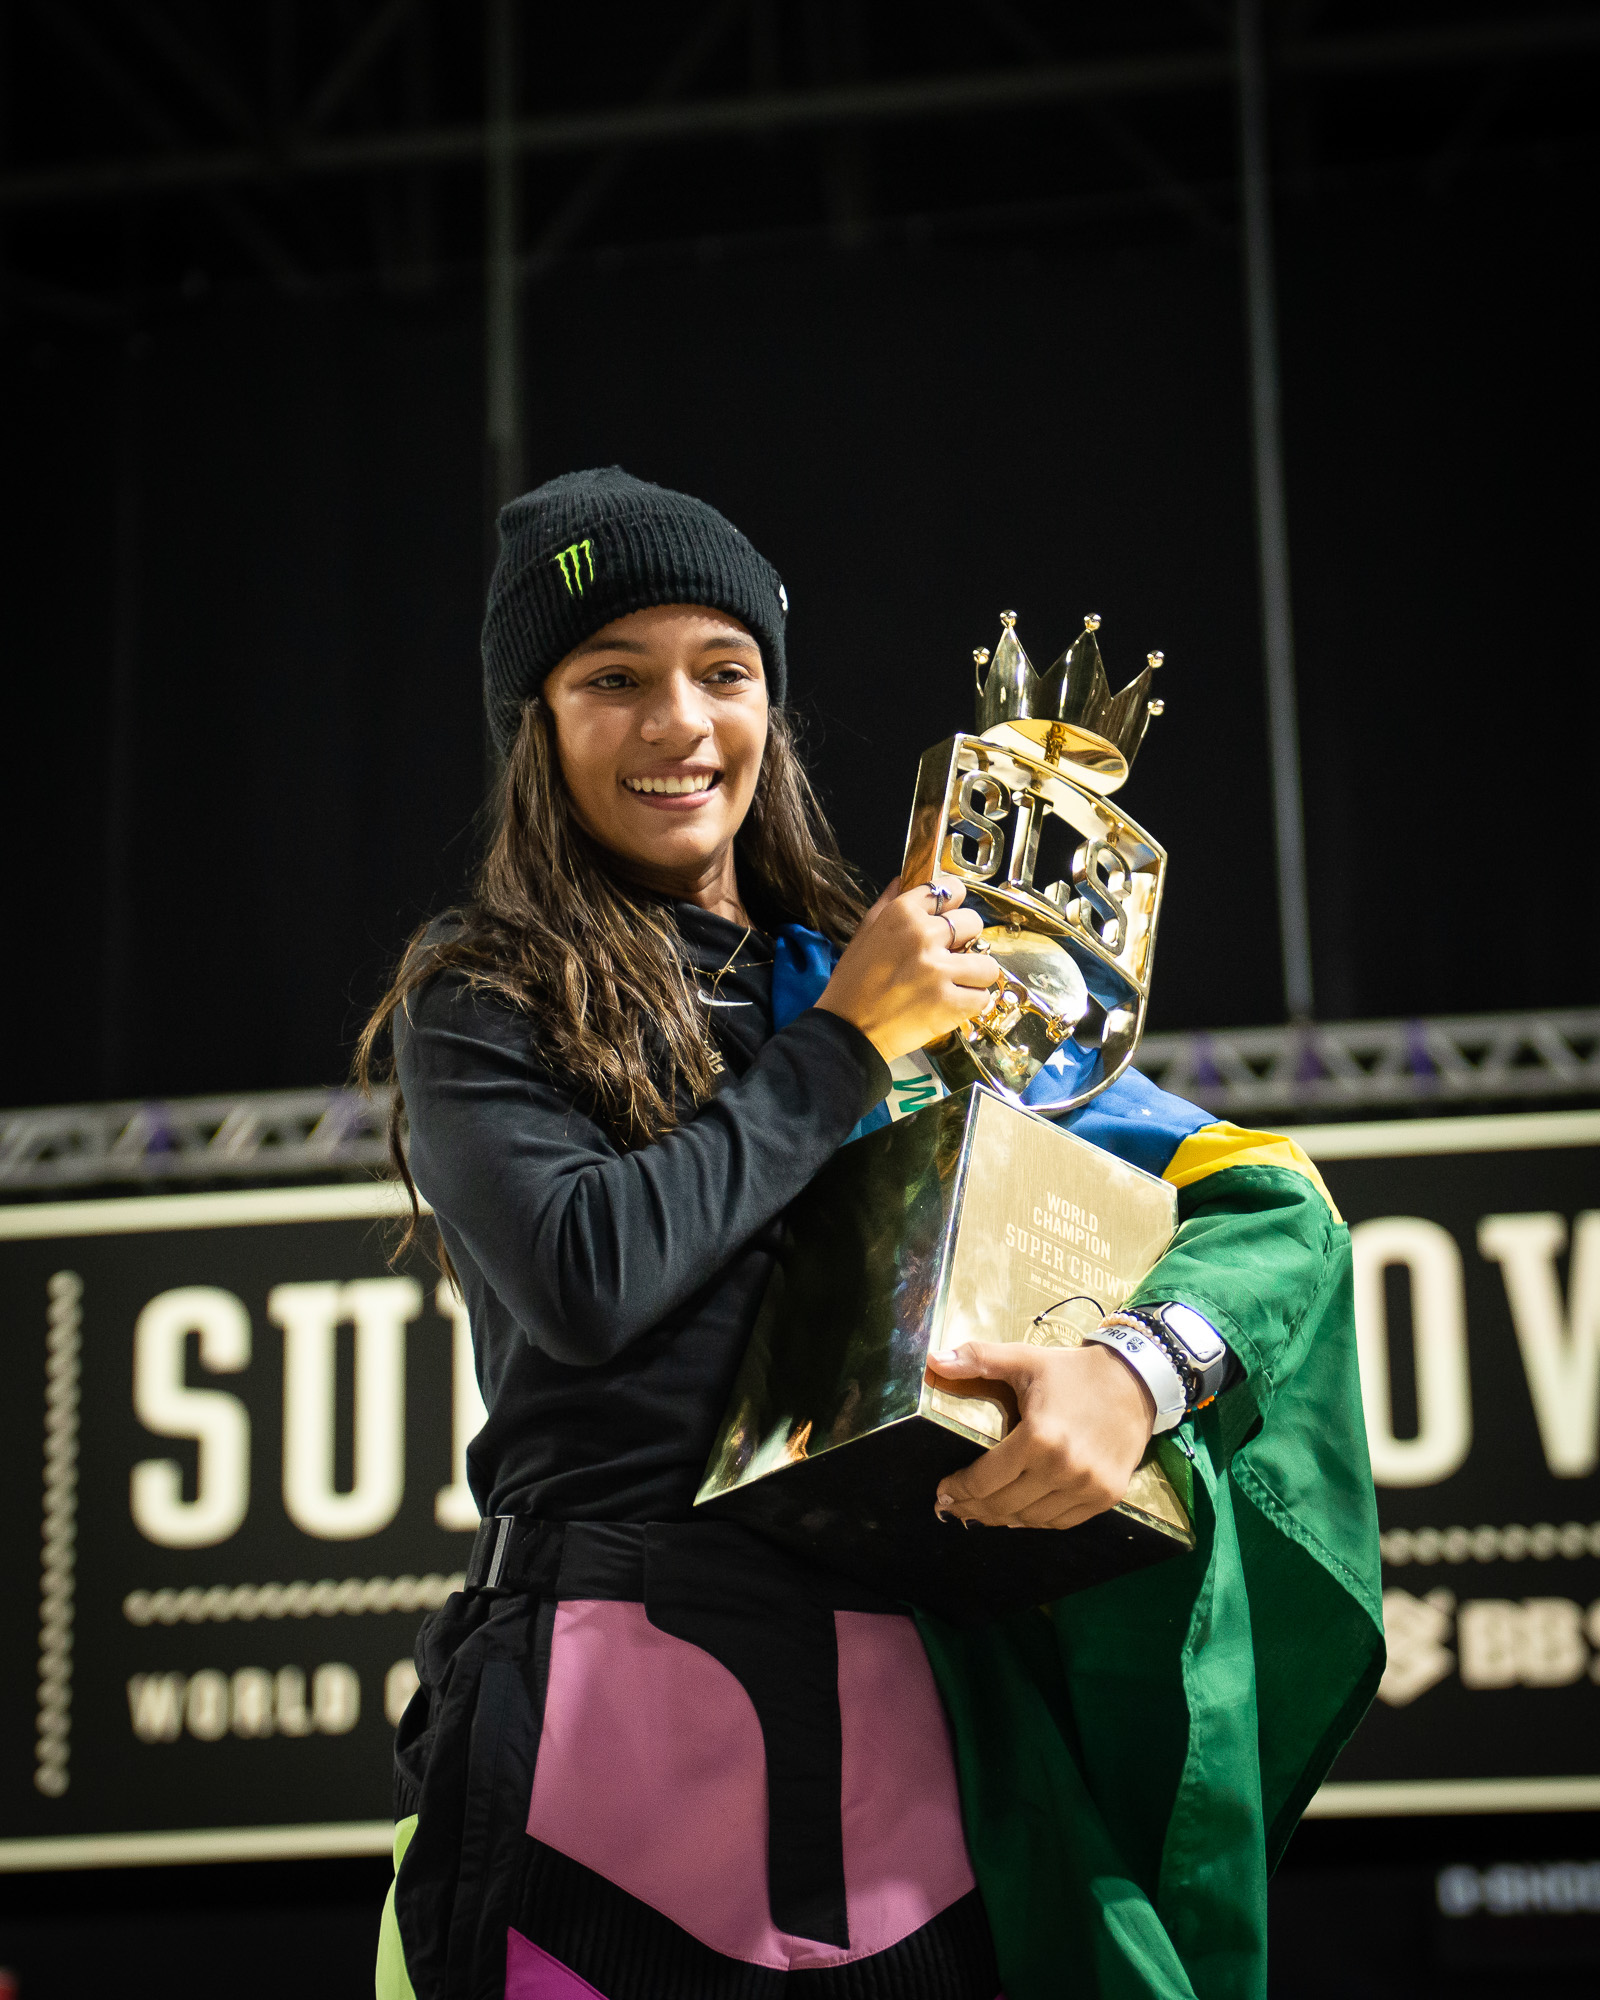 Monster Energy’s Rayssa Leal Wins 2022 SLS Super Crown World Championship in Rio de Janeiro